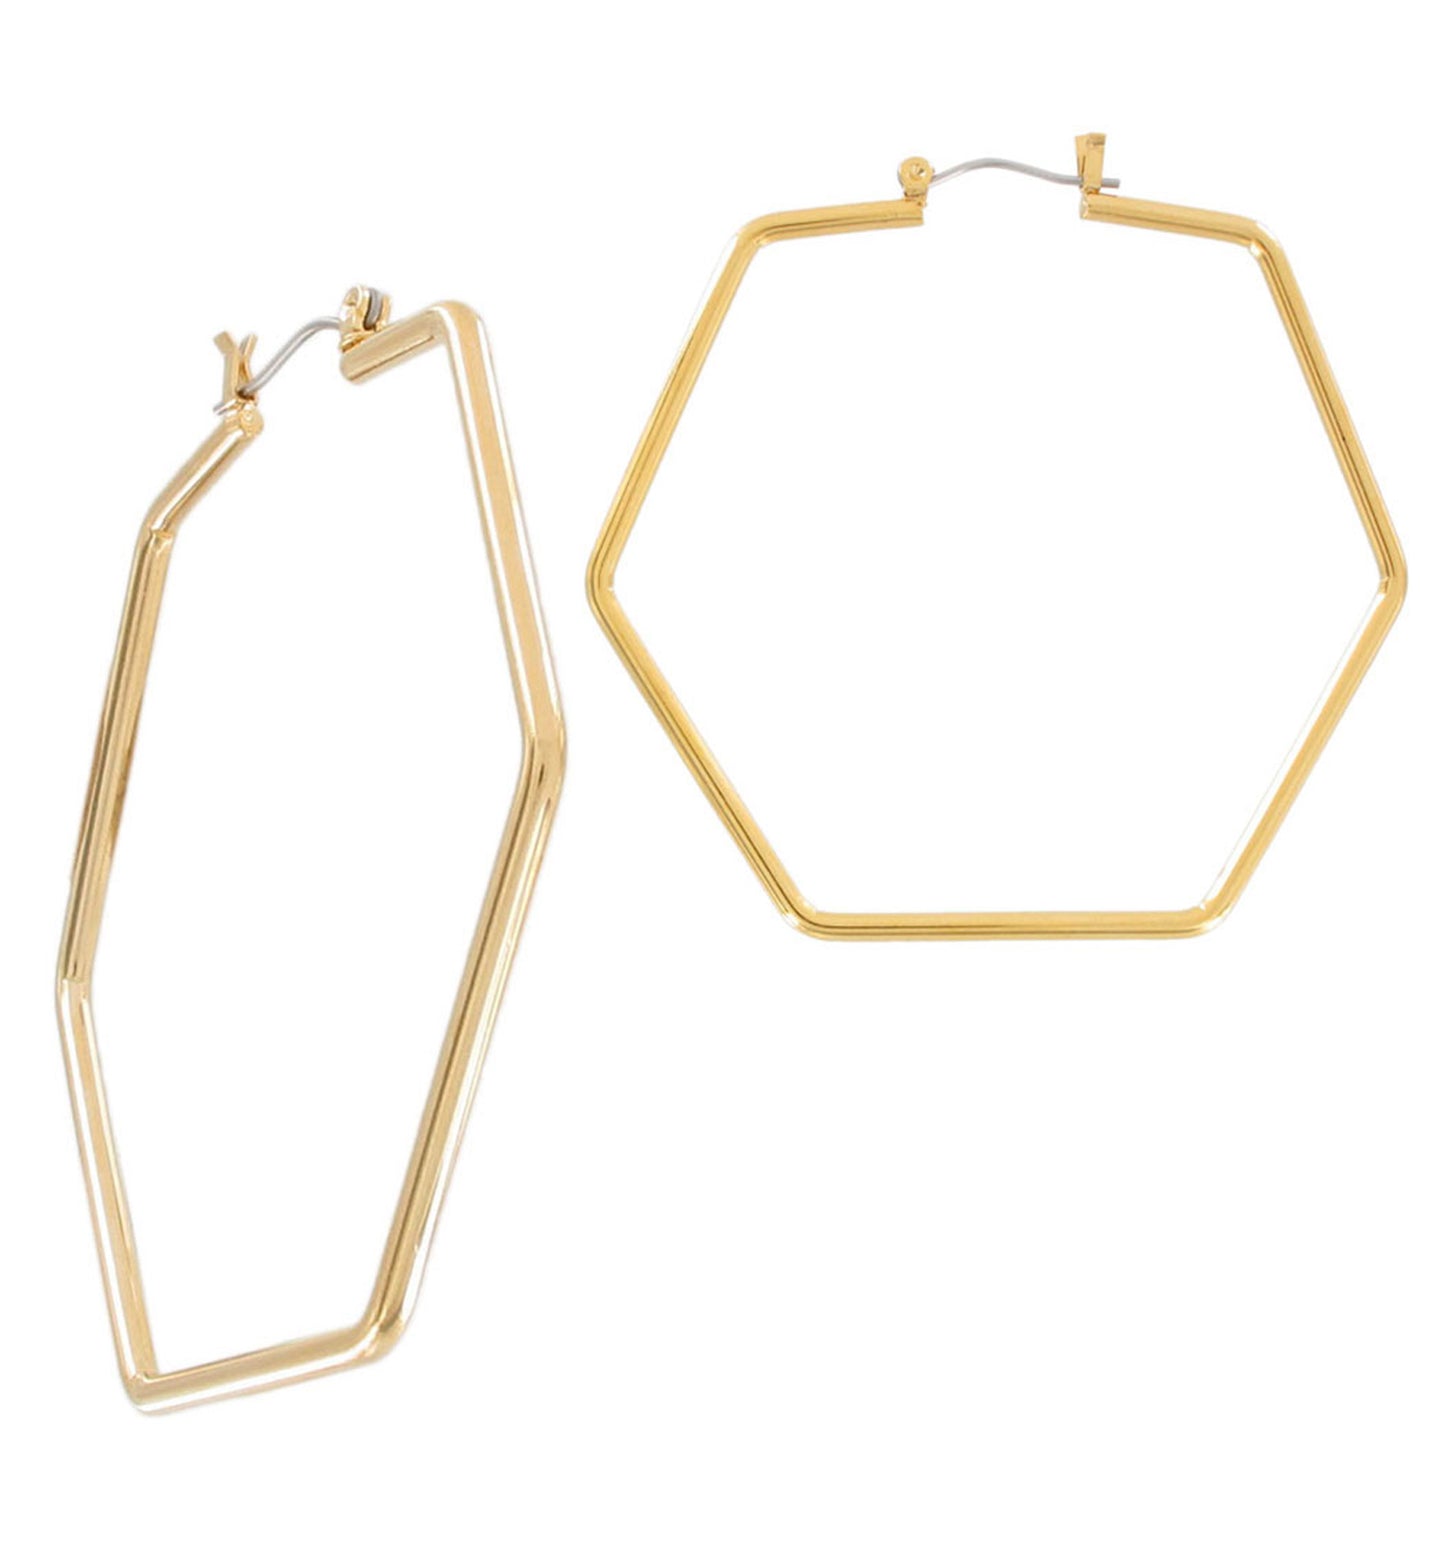 Ky & Co Gold Tone Big Hoop Earrings Hexagon Geometric 2 1/4" USA Made